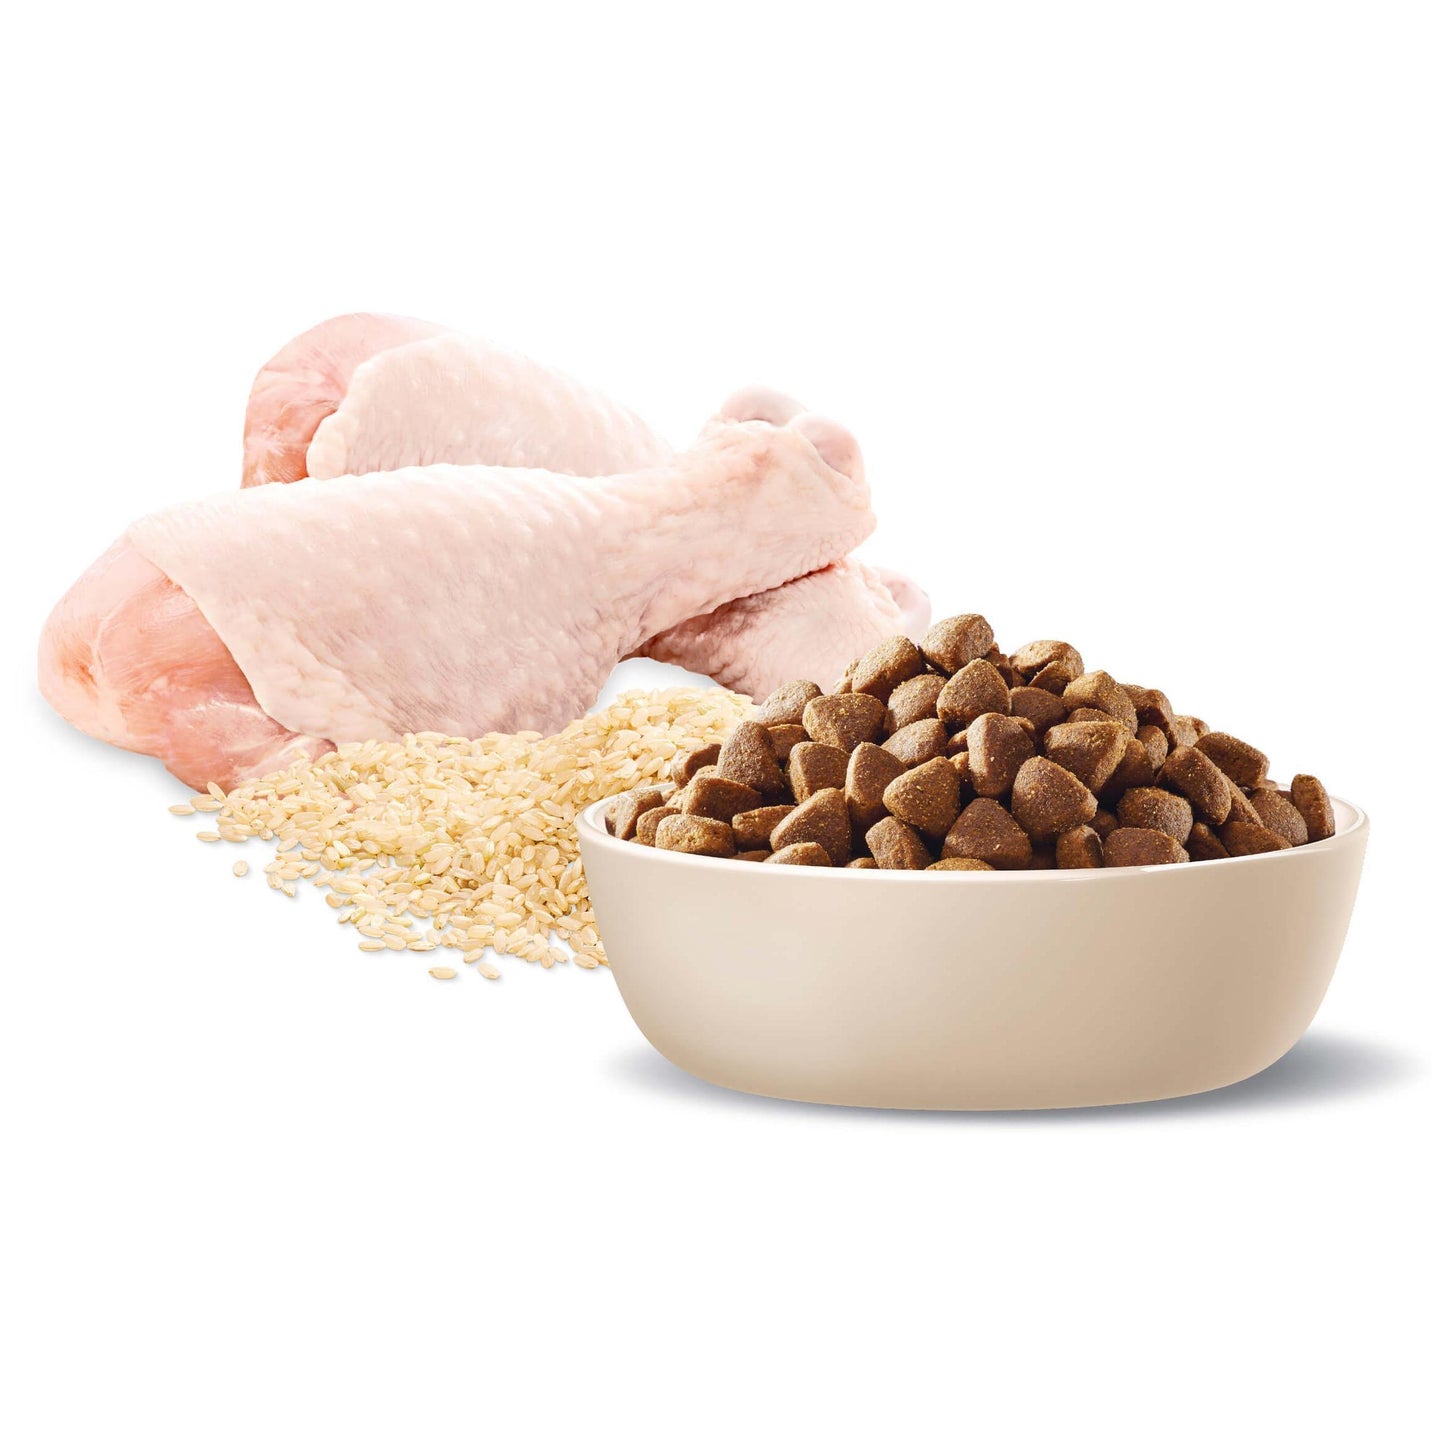 Advance Mature Medium Breed Chicken Dry Dog Food 15kg